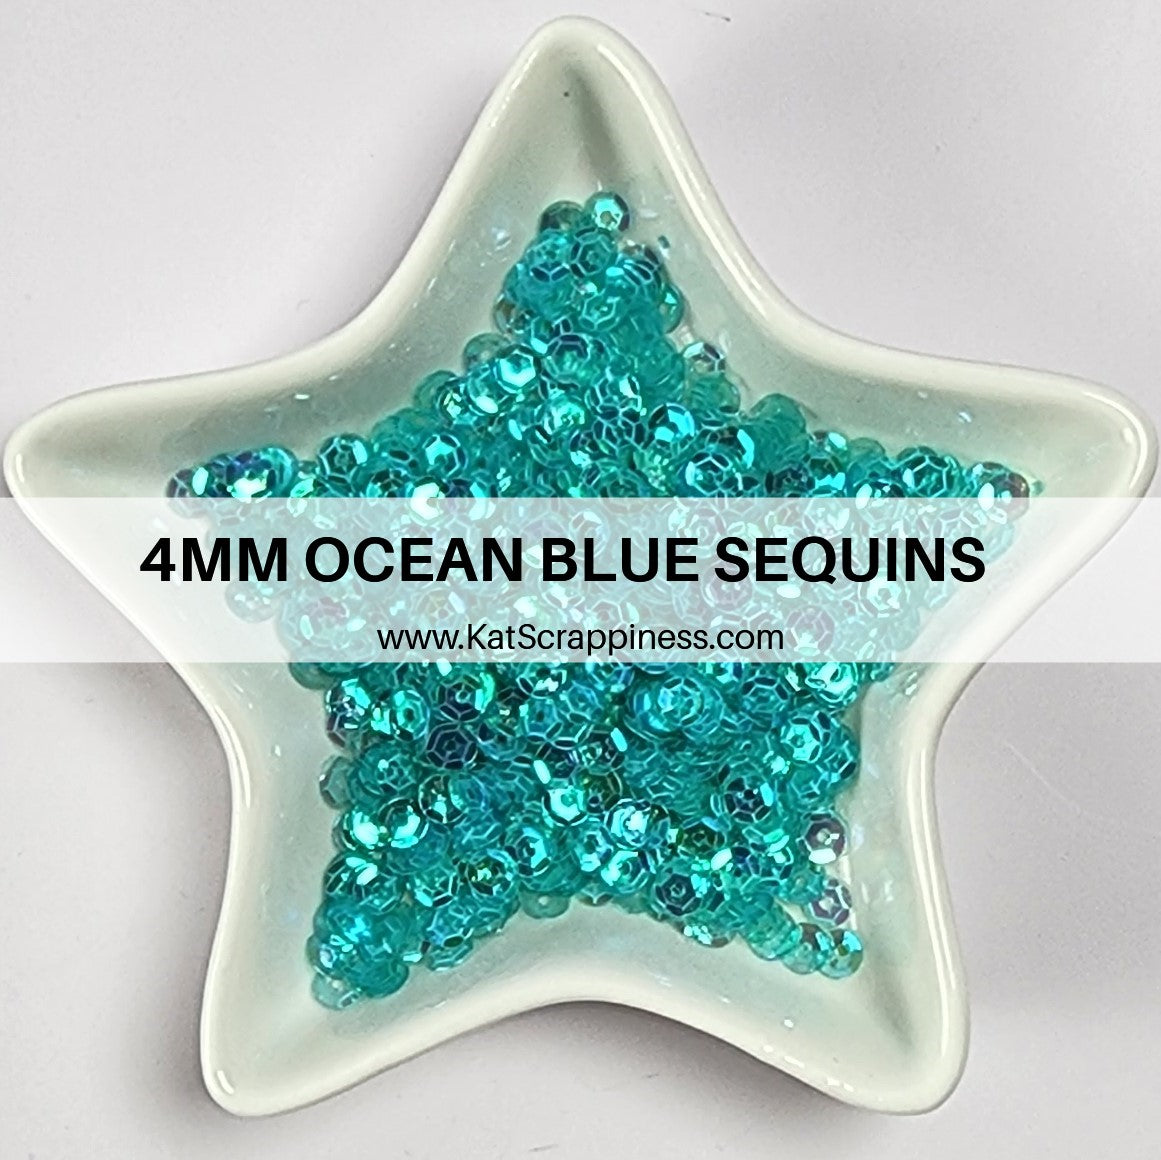 4mm Ocean Blue Sequins